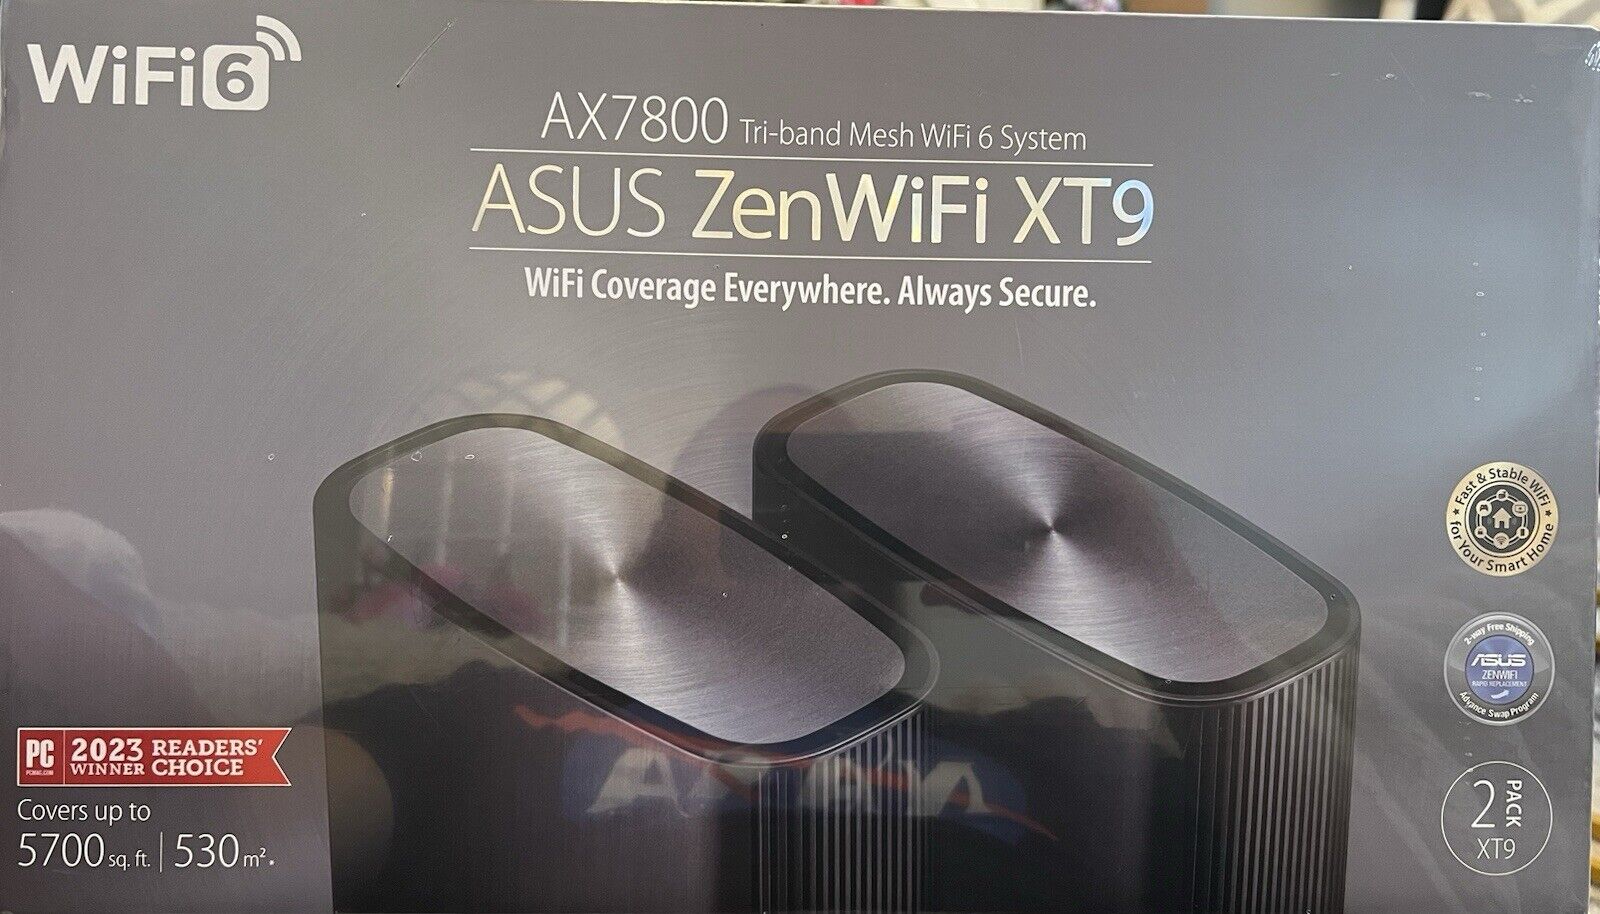 ASUS Zenwifi XT9 AX7800 Tri-band Mesh Wifi 6 System